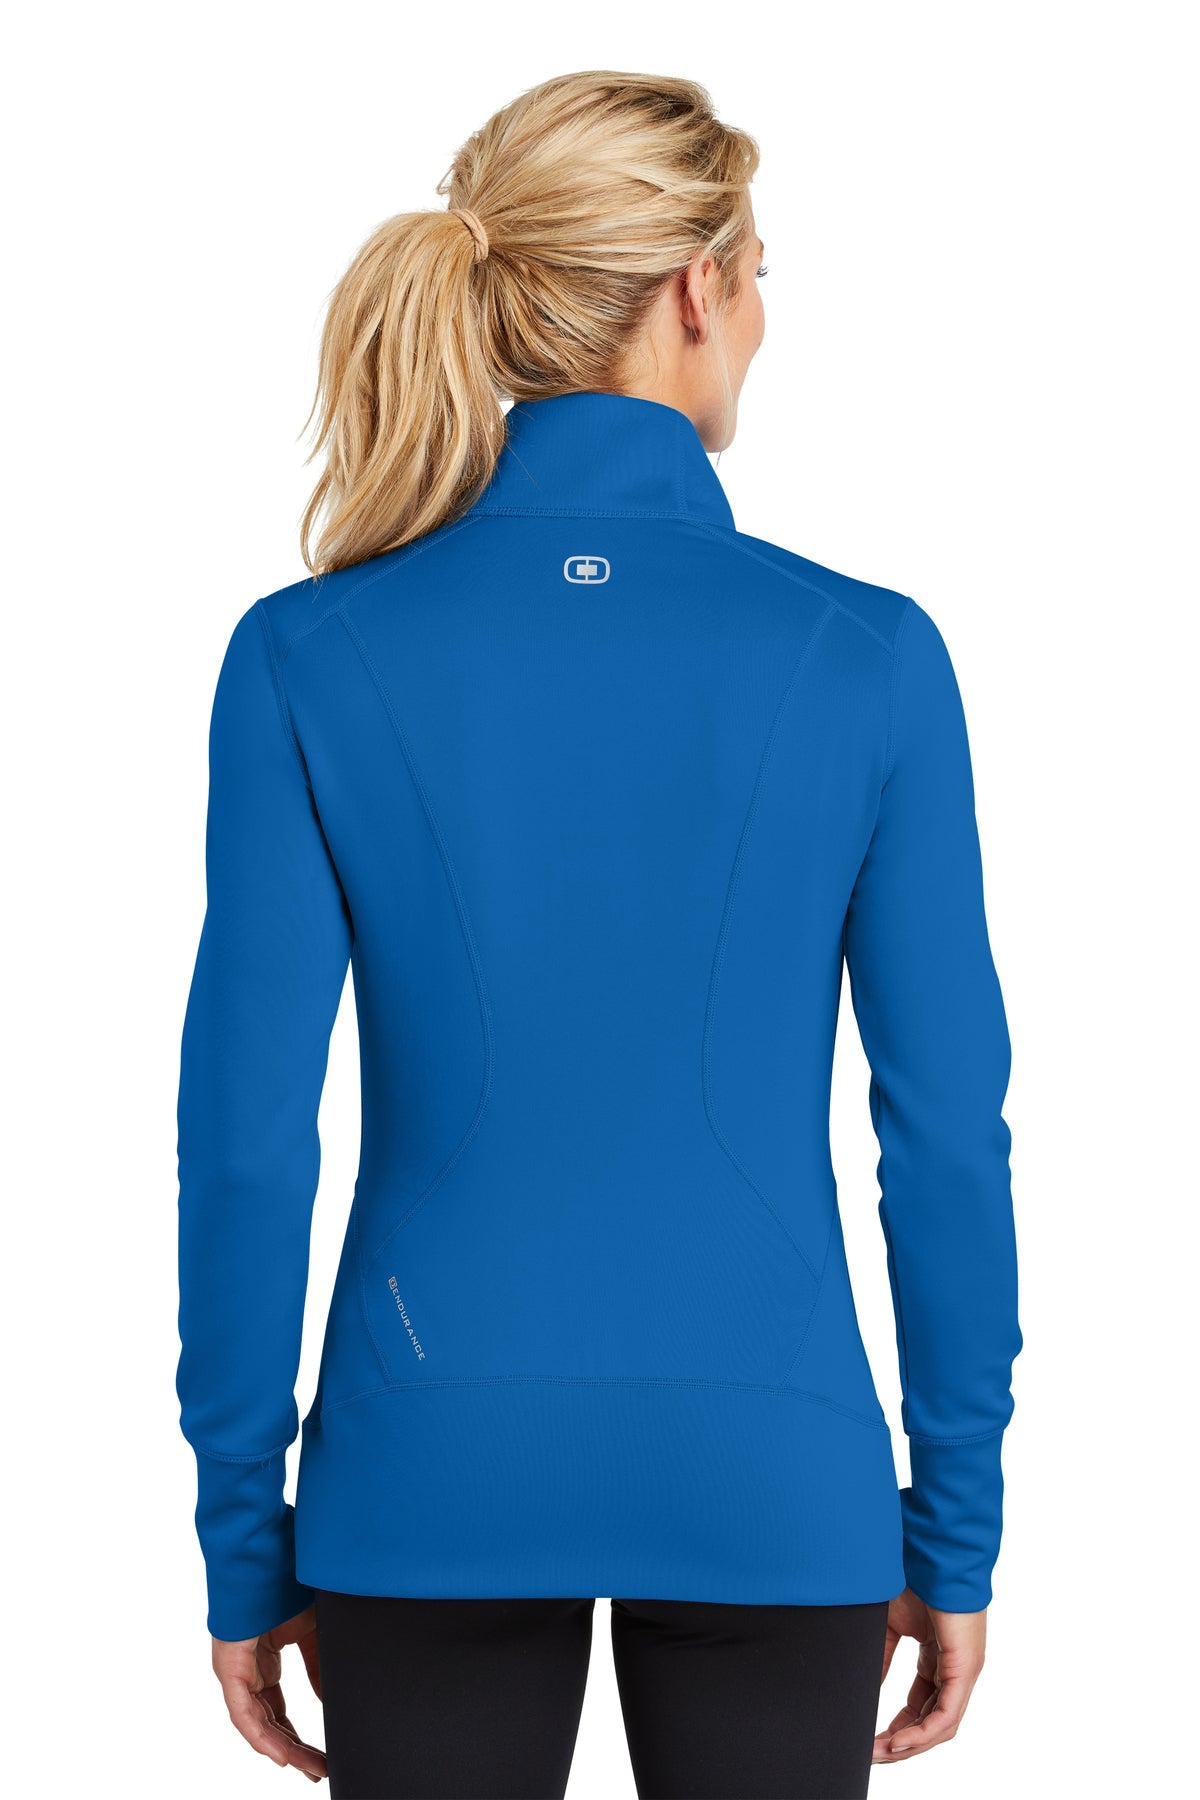 ogio endurance_loe700 _electric blue_company_logo_jackets